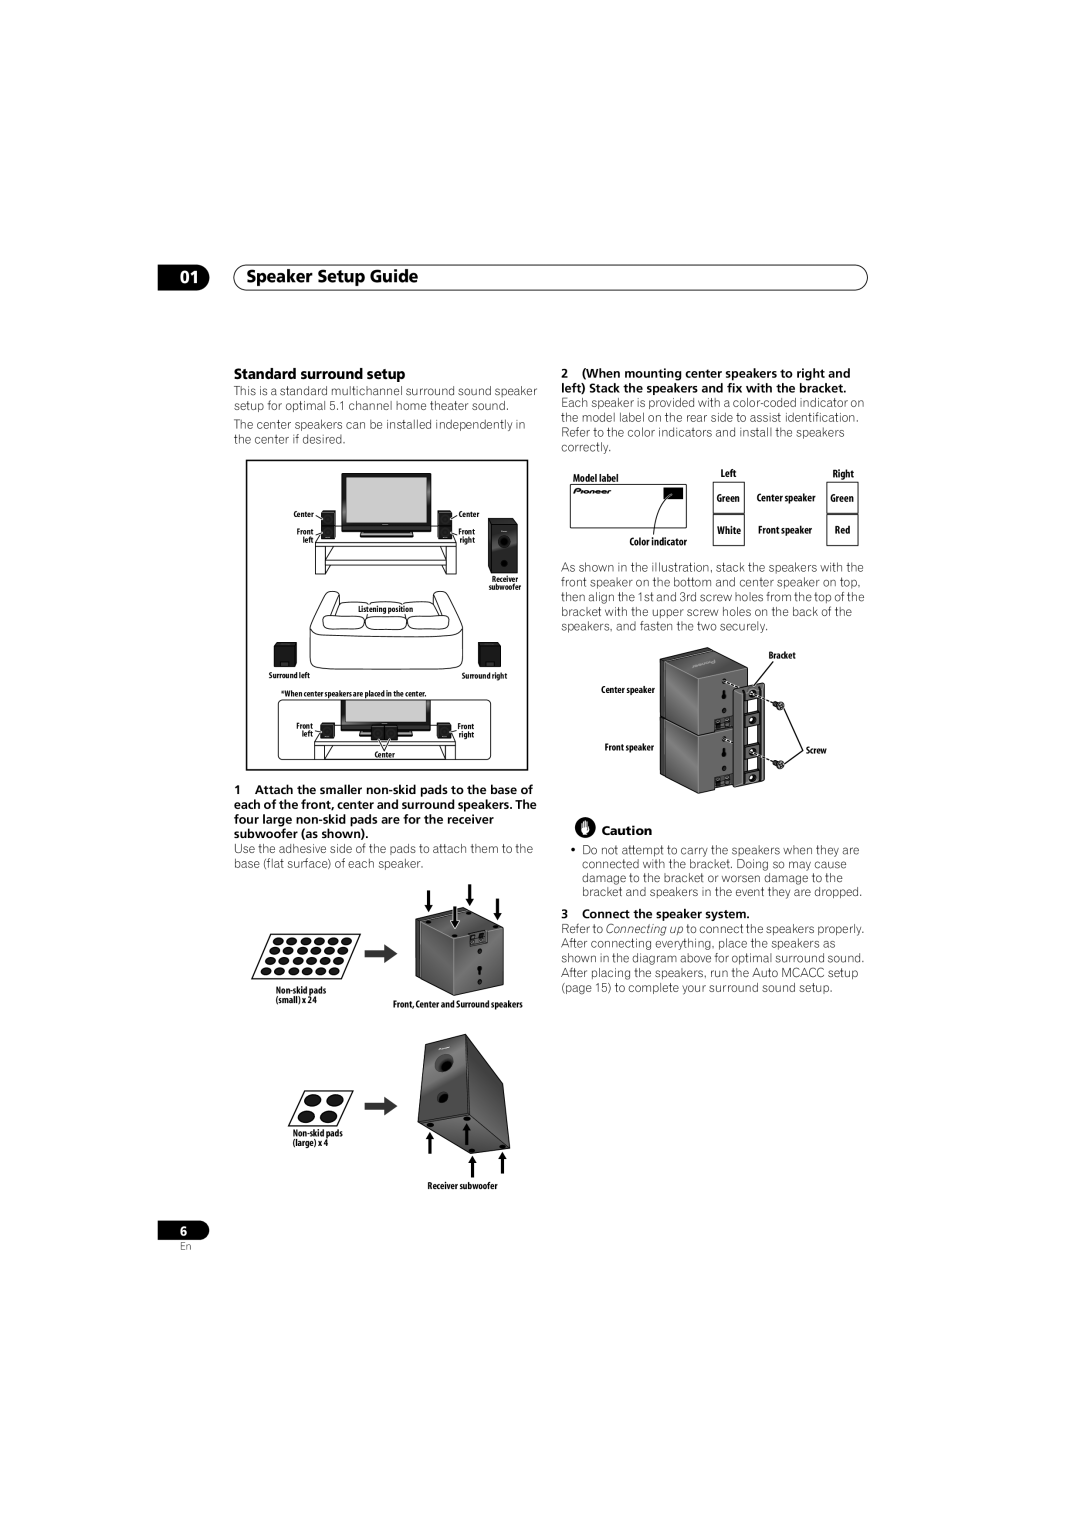 Pioneer SX-SW330, S-ST330, HTP-330 operating instructions 01Speaker Setup Guide, Standard surround setup 